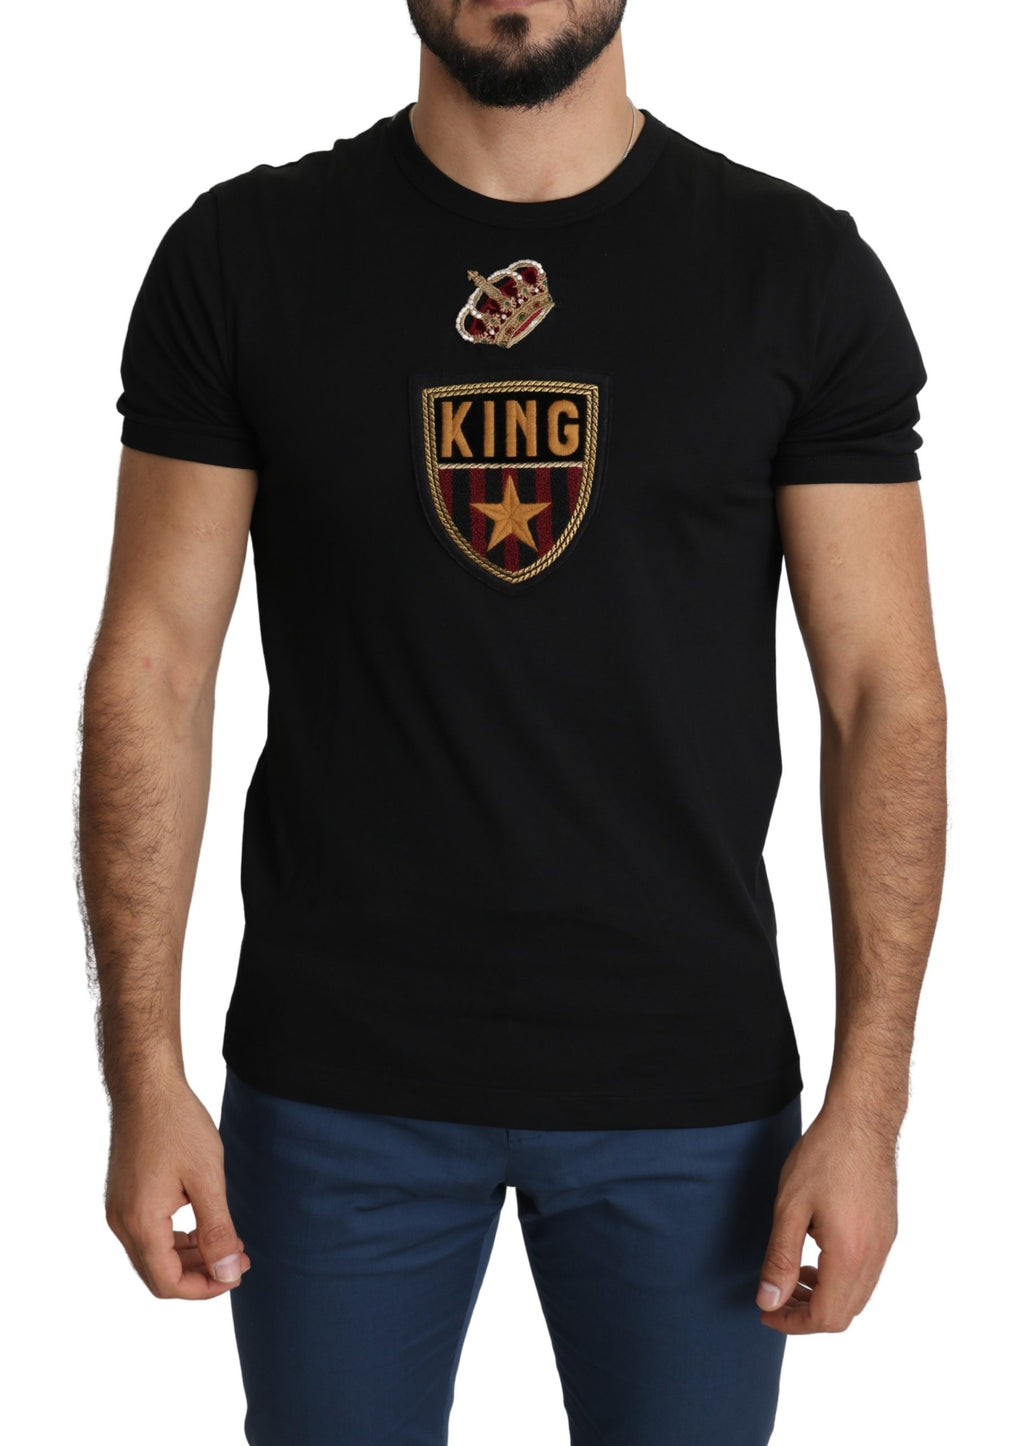 Black King Crown Patch Men Top Cotton  T-shirt